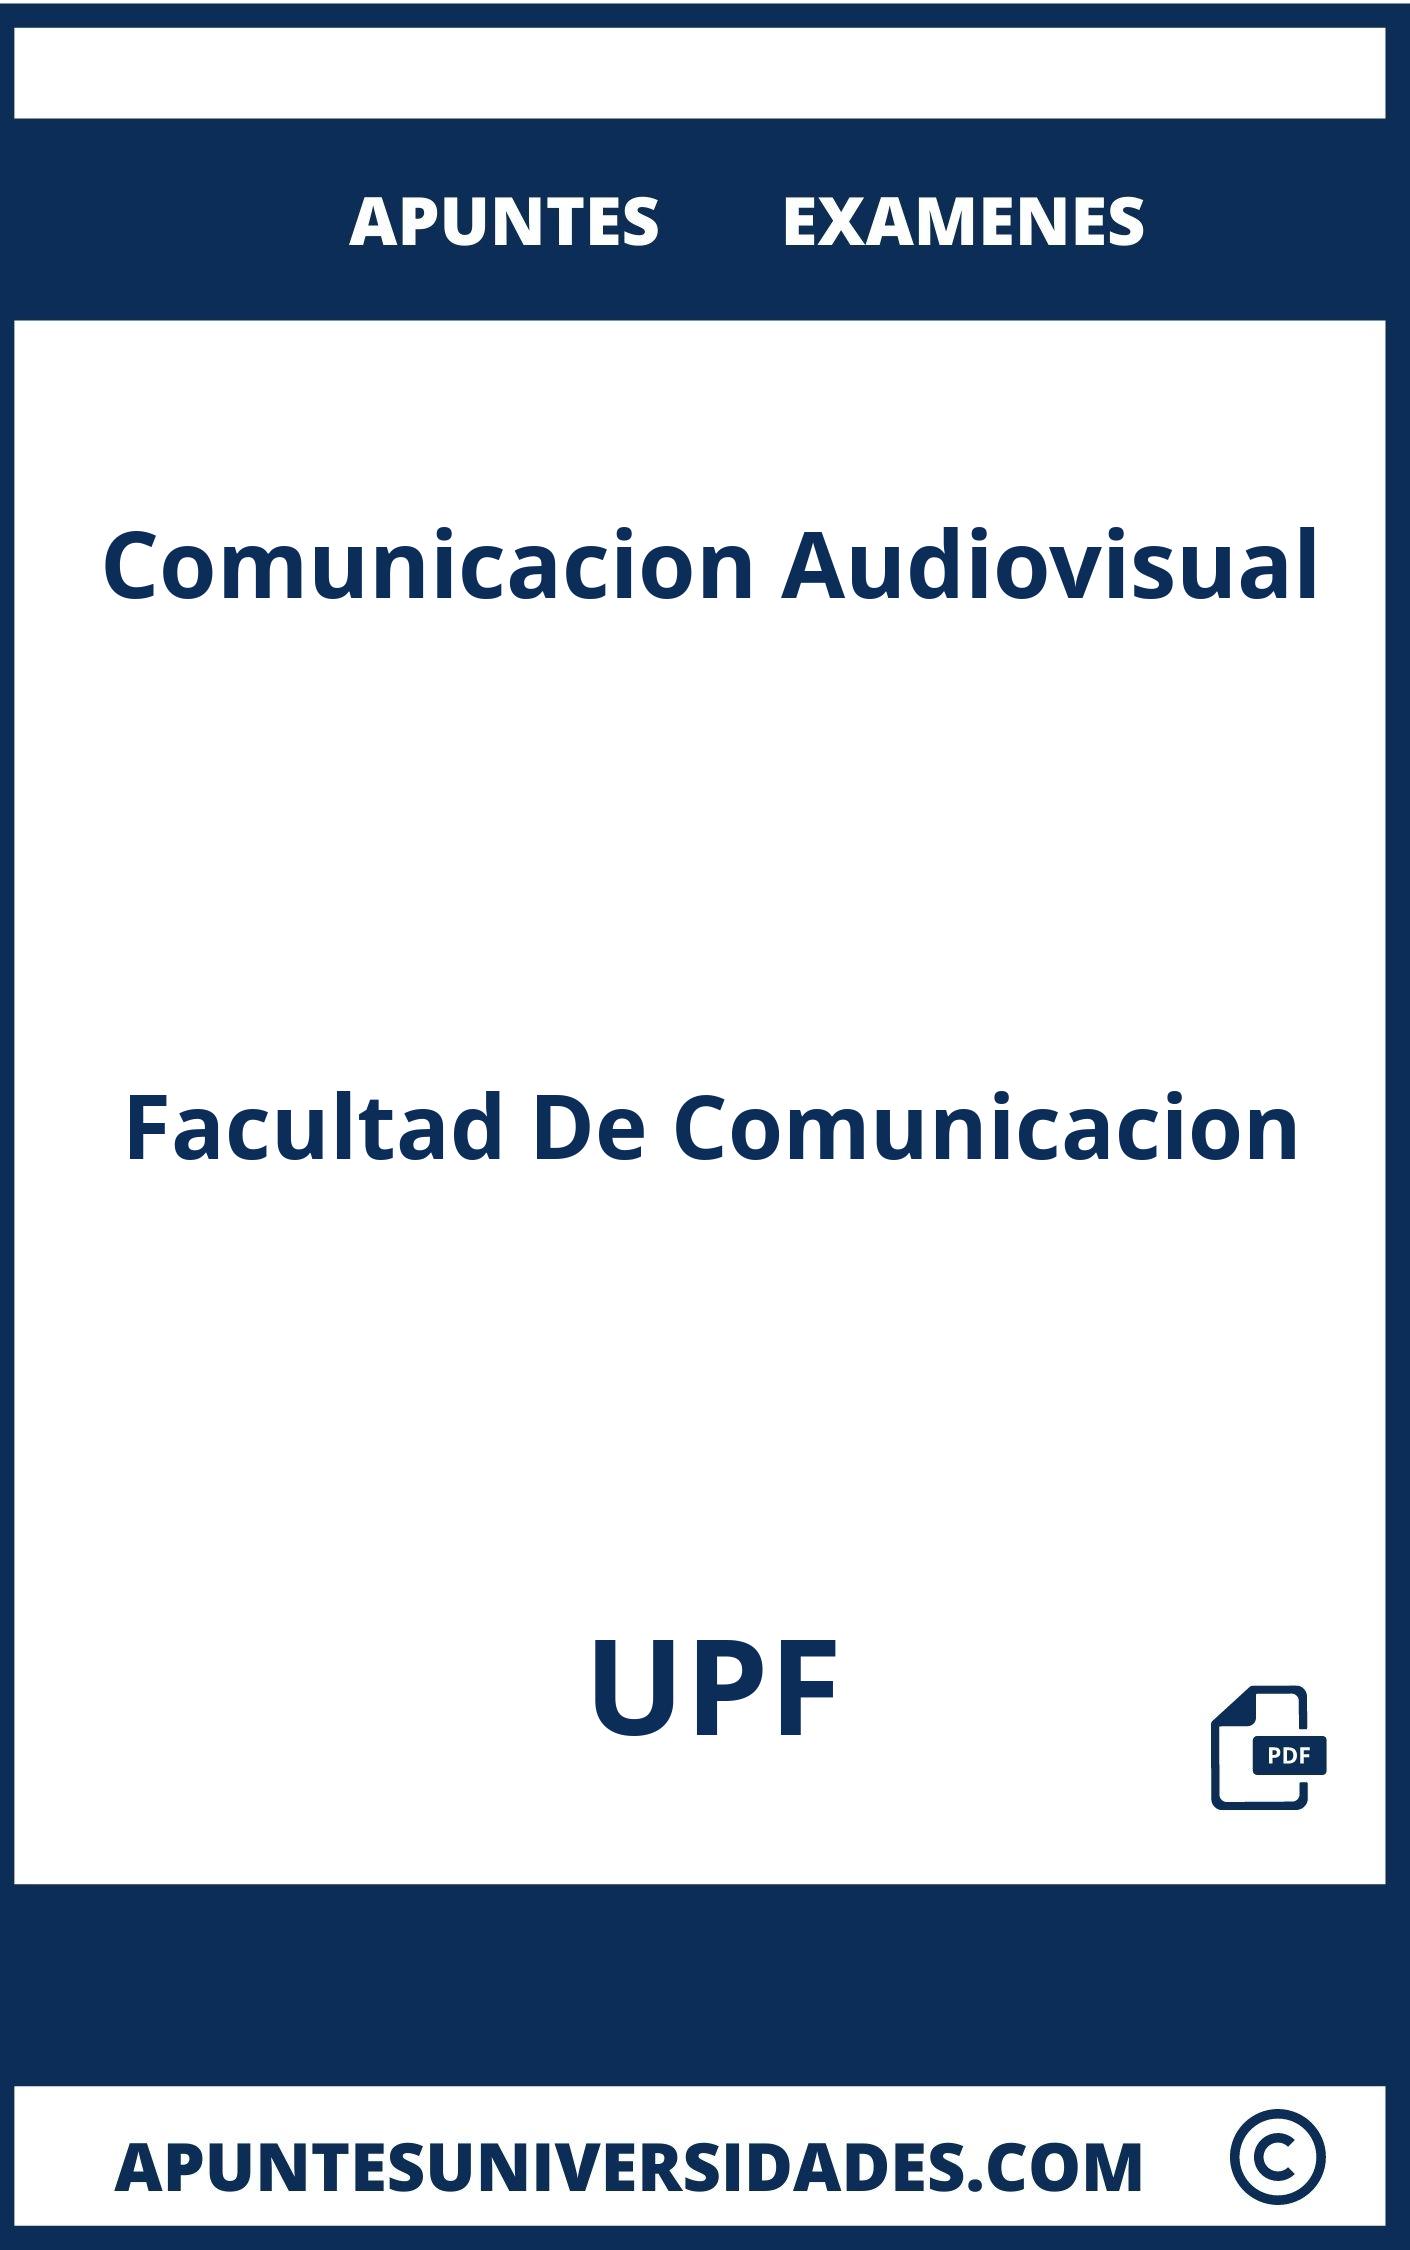 Comunicacion Audiovisual UPF Examenes Apuntes